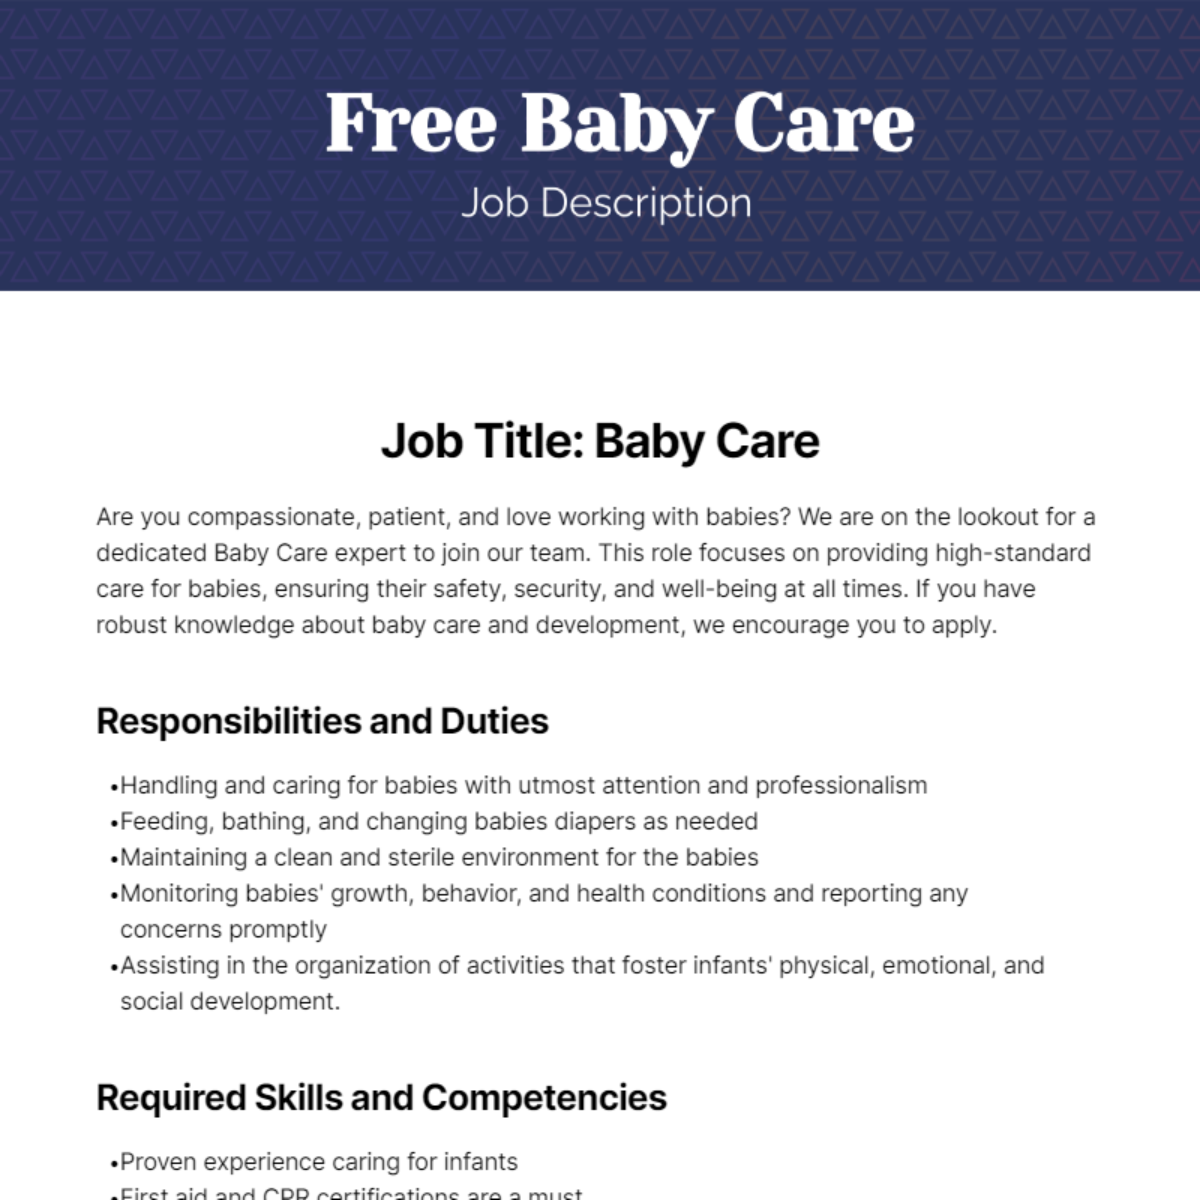 Free Baby Care Job Description Template